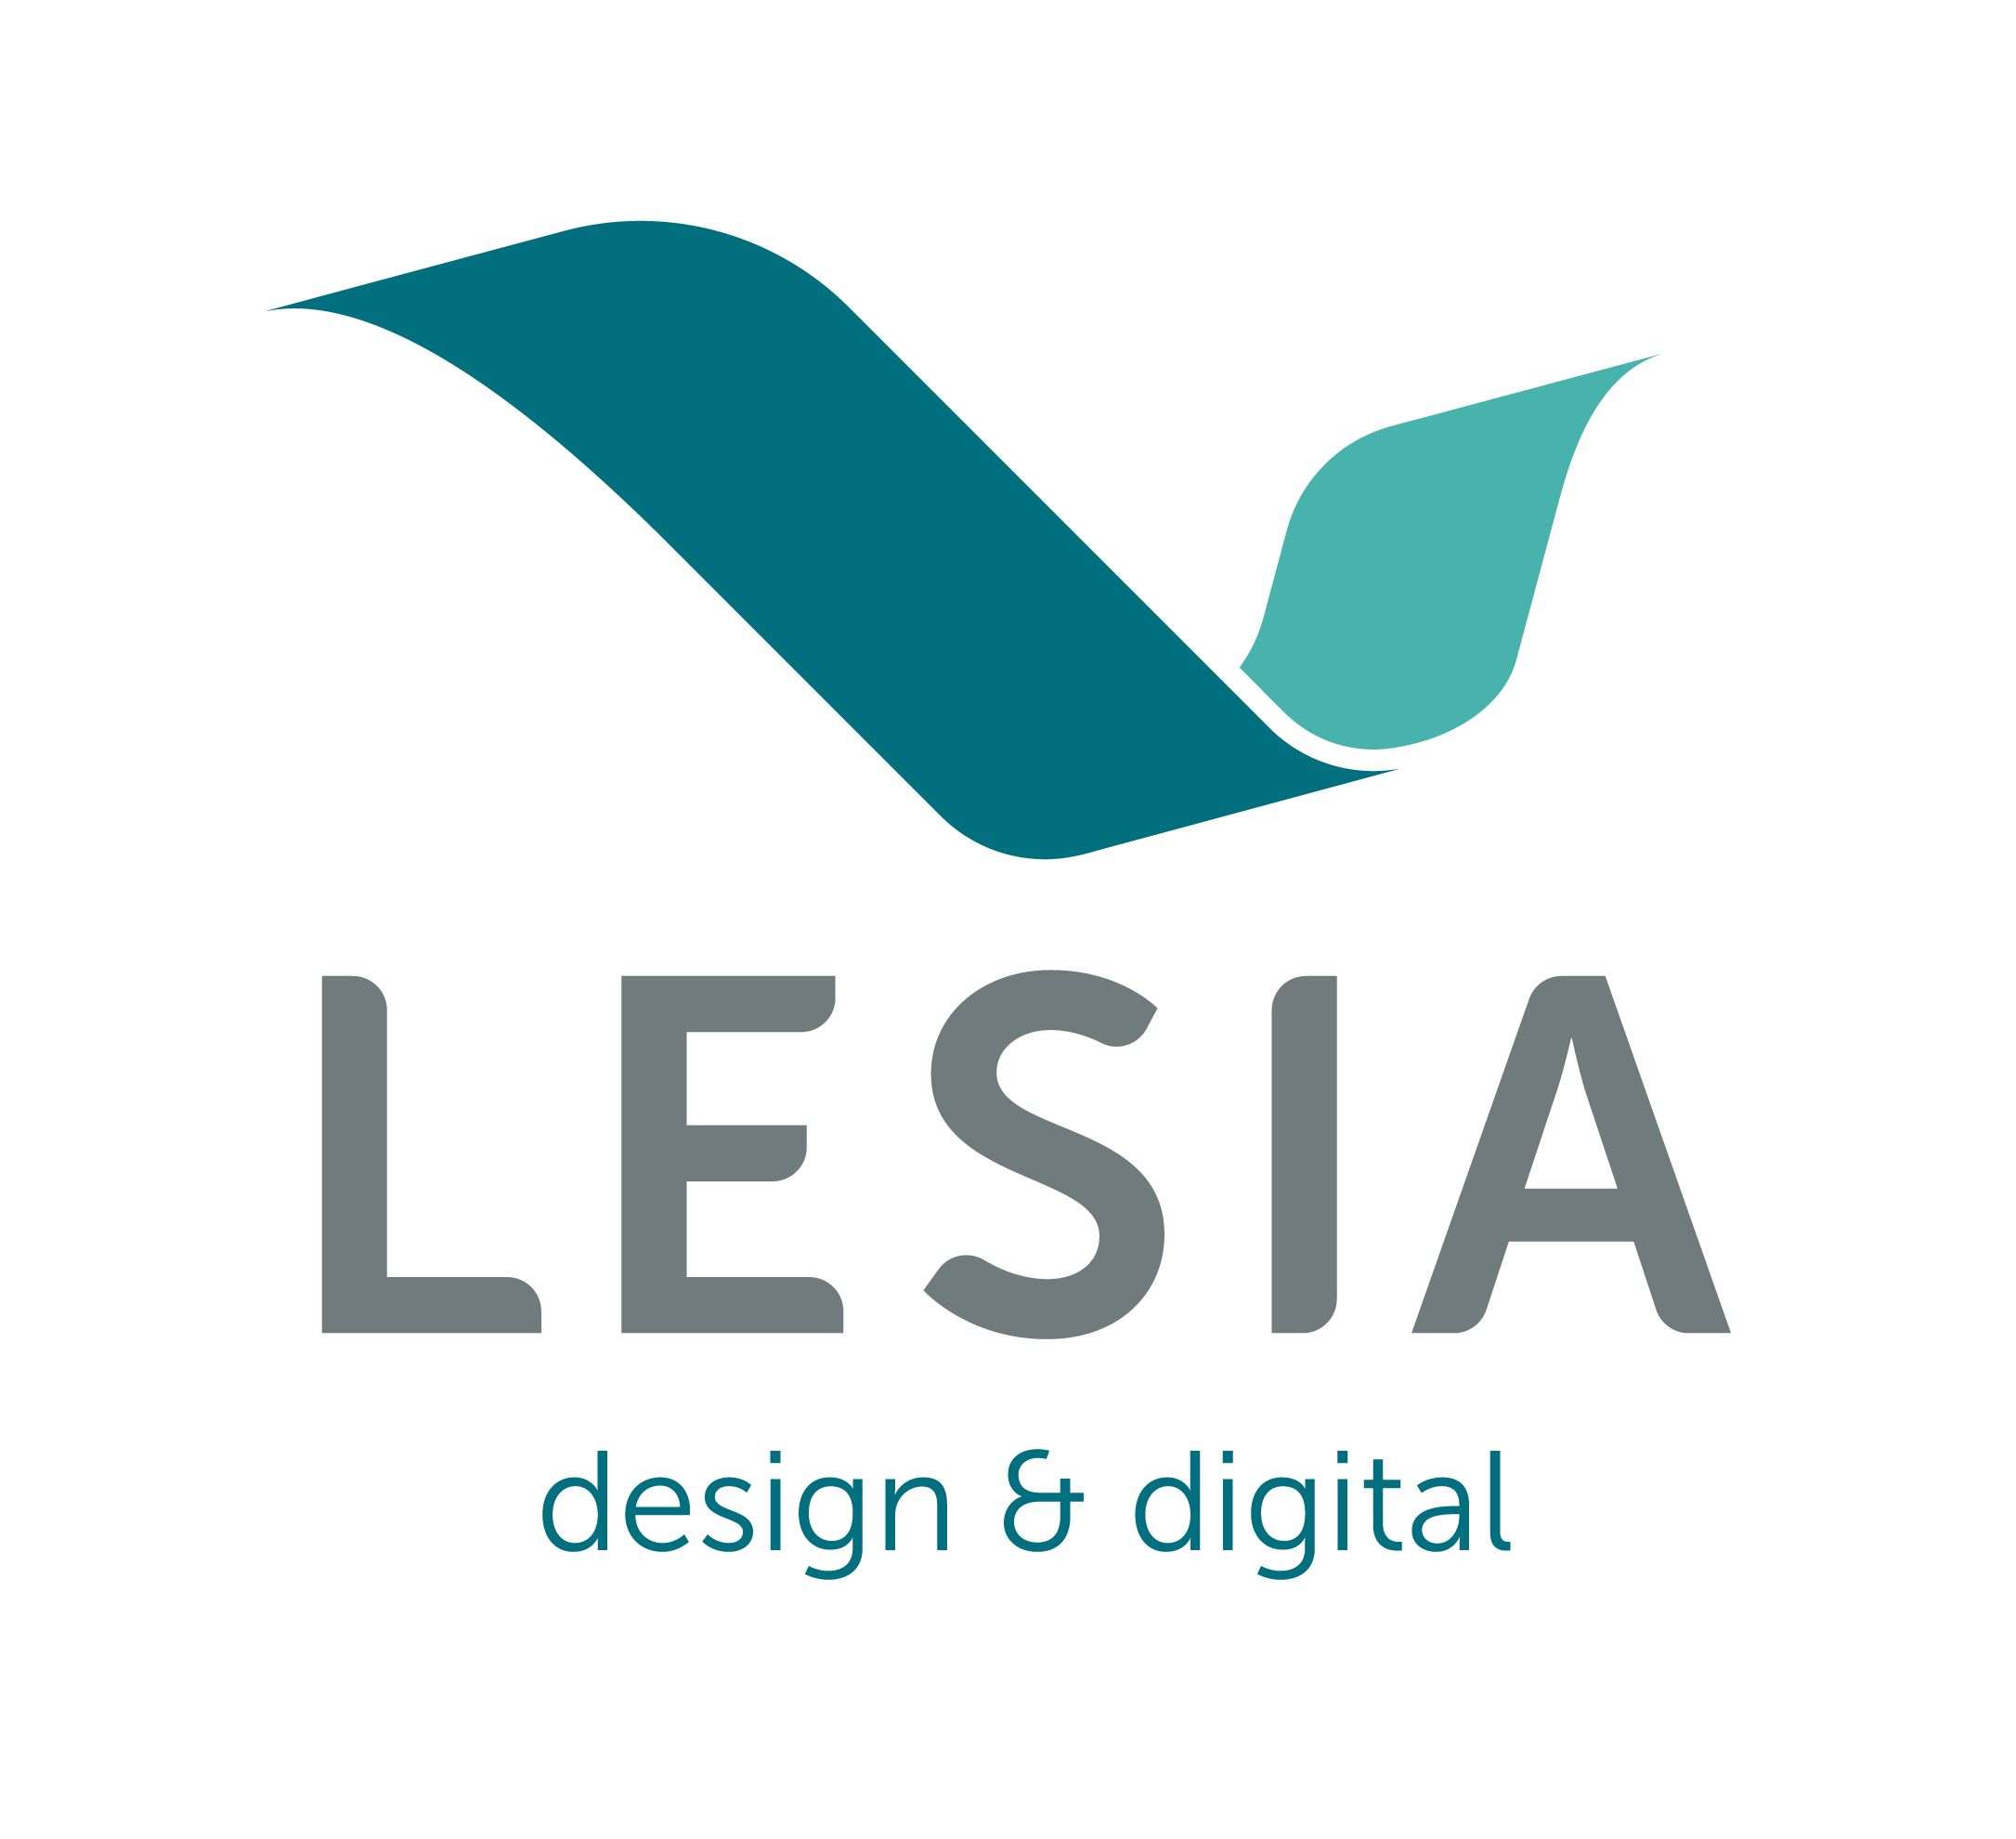 Lesia-design-digital3color_3color-Lesia-Design-and-Digital-.png